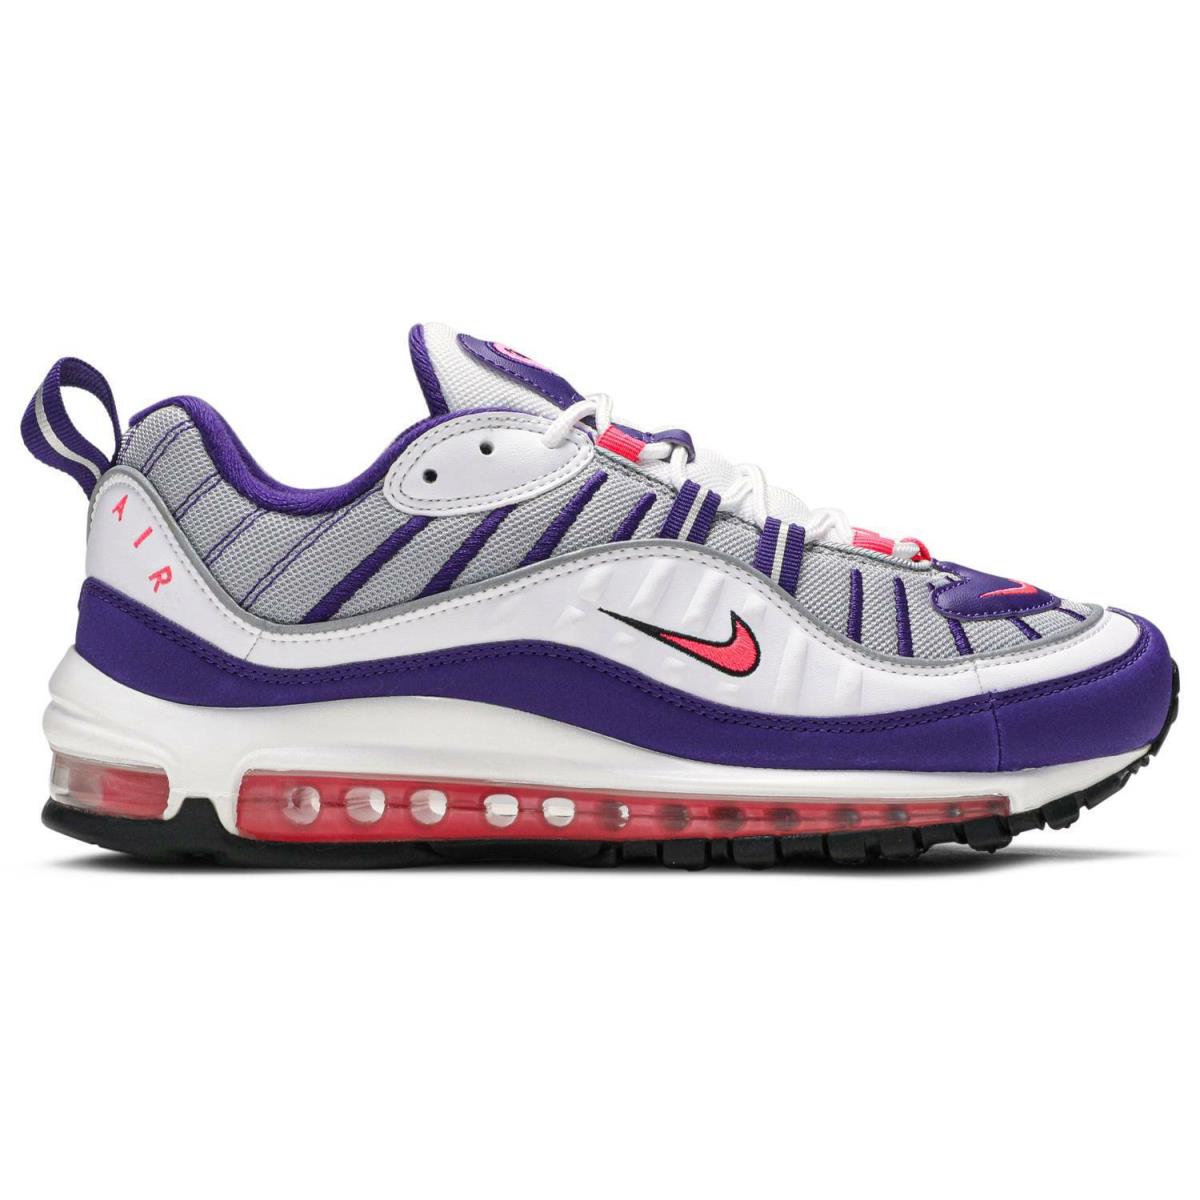 Nike Air Max 98 Women Size: 6 Raptors Shoes White/pink/purple AH6799 110 - White